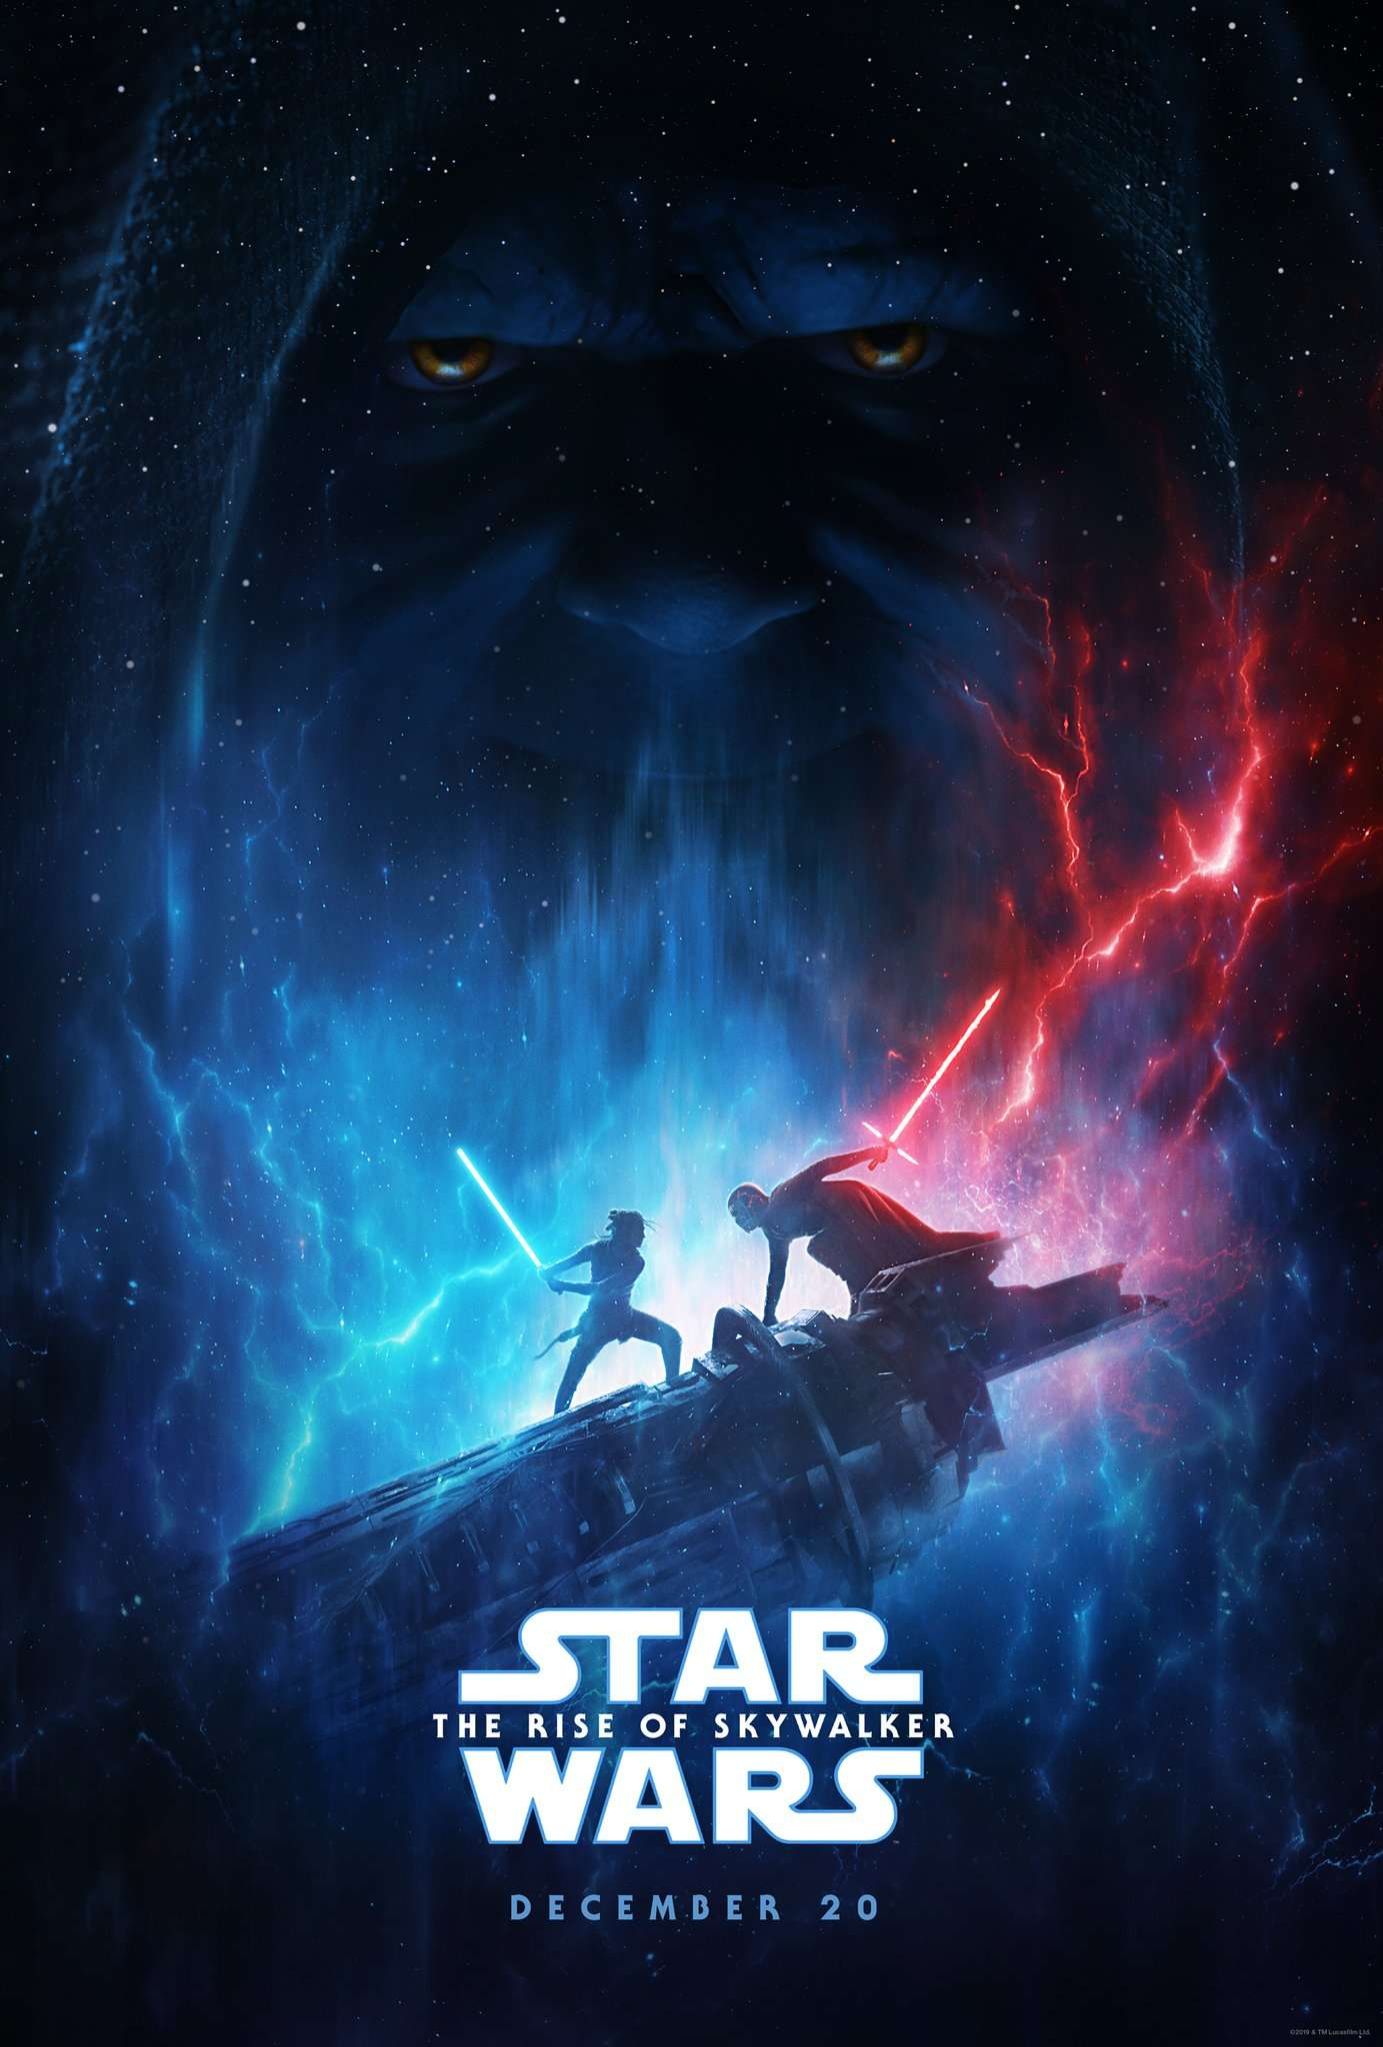 Emperor Palpatine Rise of Skywalker Poster